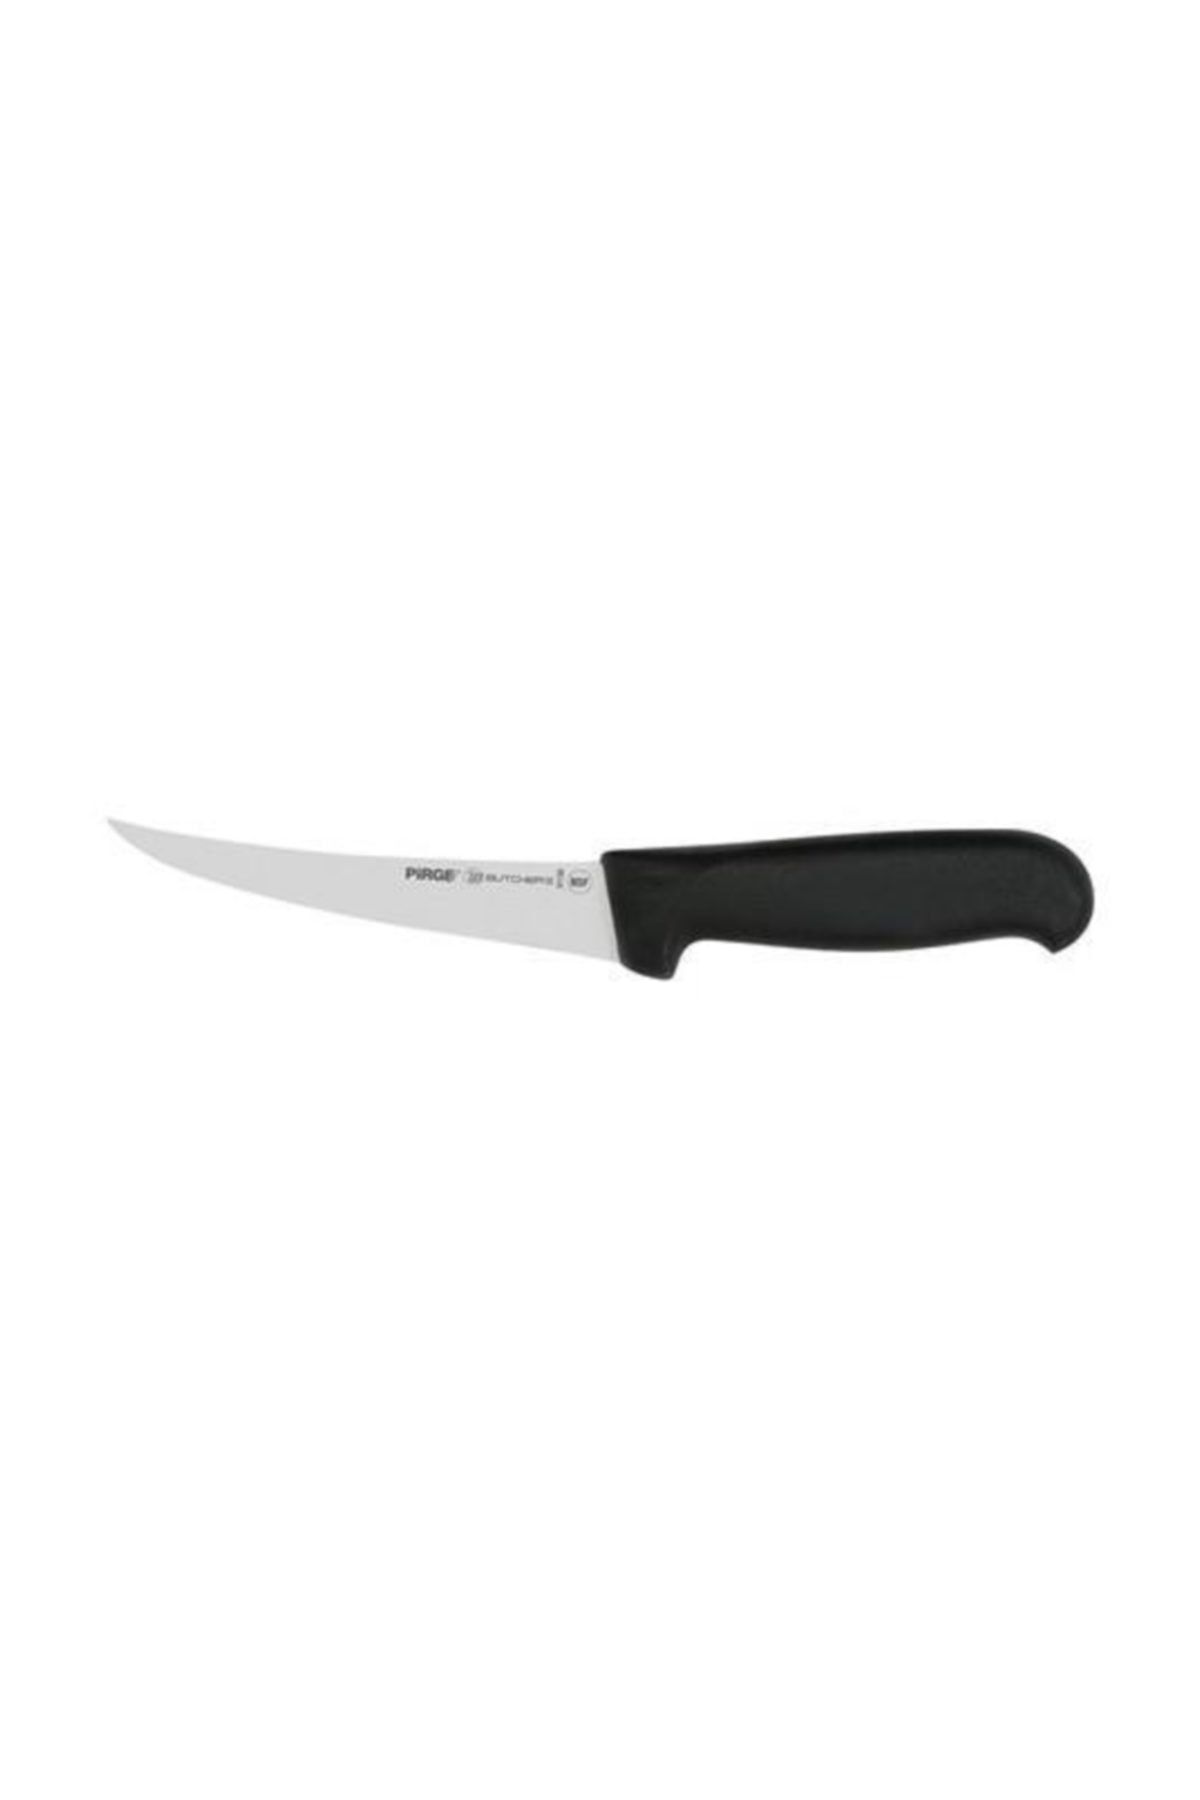 Pirge Butchers Et Sıyırma Bıçağı 14 cm